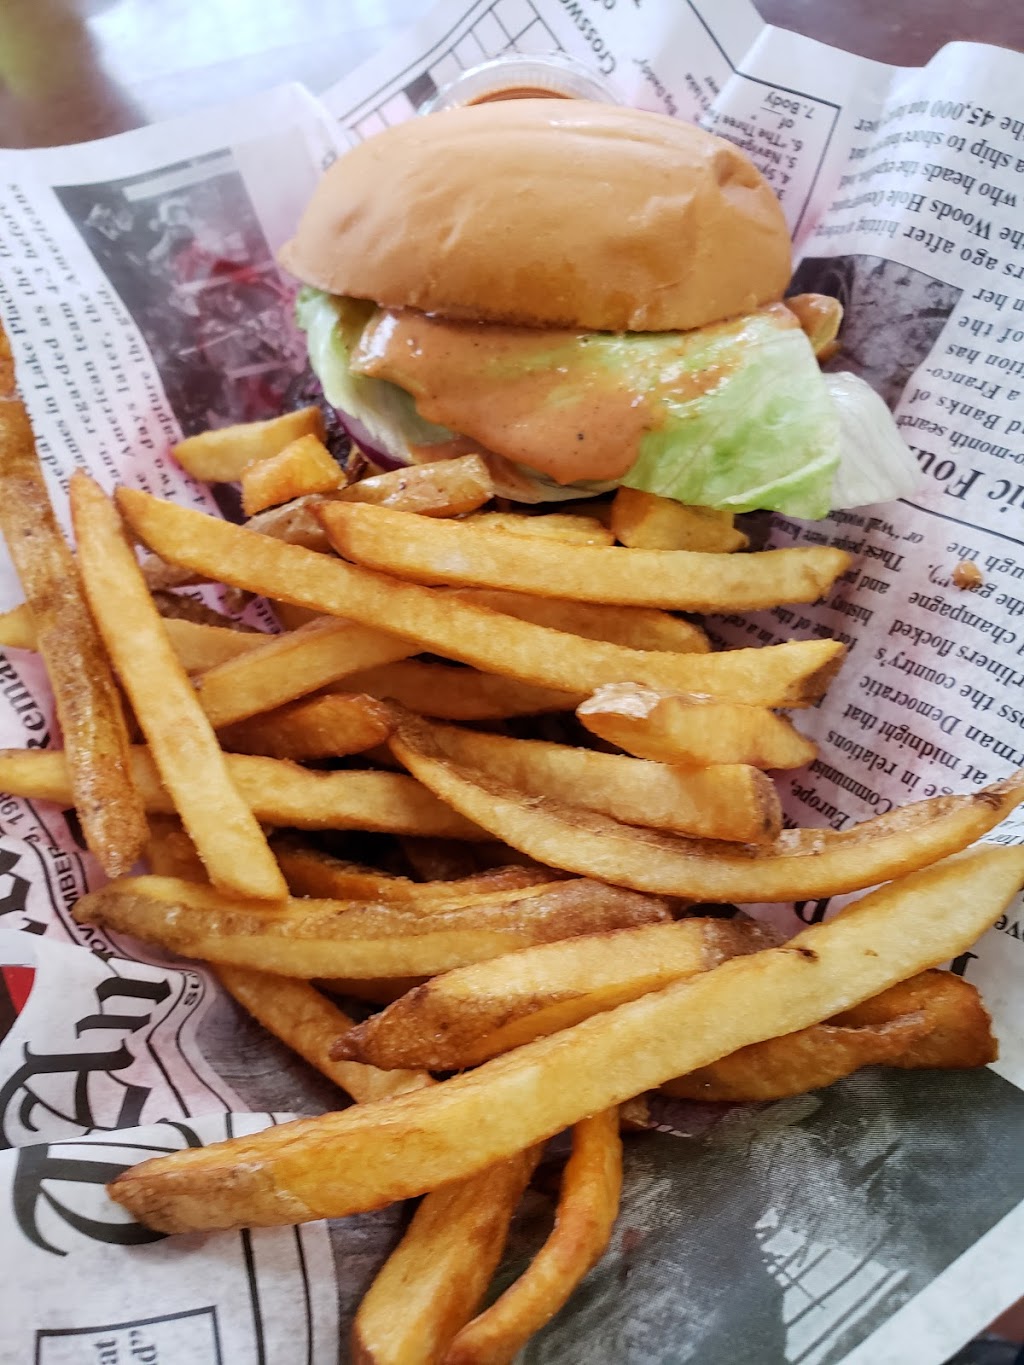 Logans Burgers & Chicken | Photo 5 of 10 | Address: 1405 E Lake St, Minneapolis, MN 55407, USA | Phone: (612) 808-9924